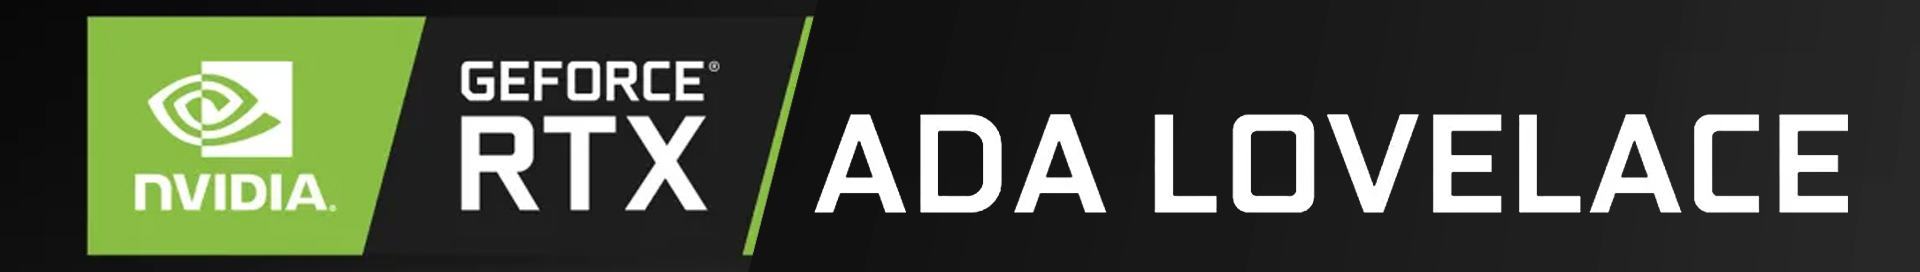 NVIDIA-ADA-Loveless technologie